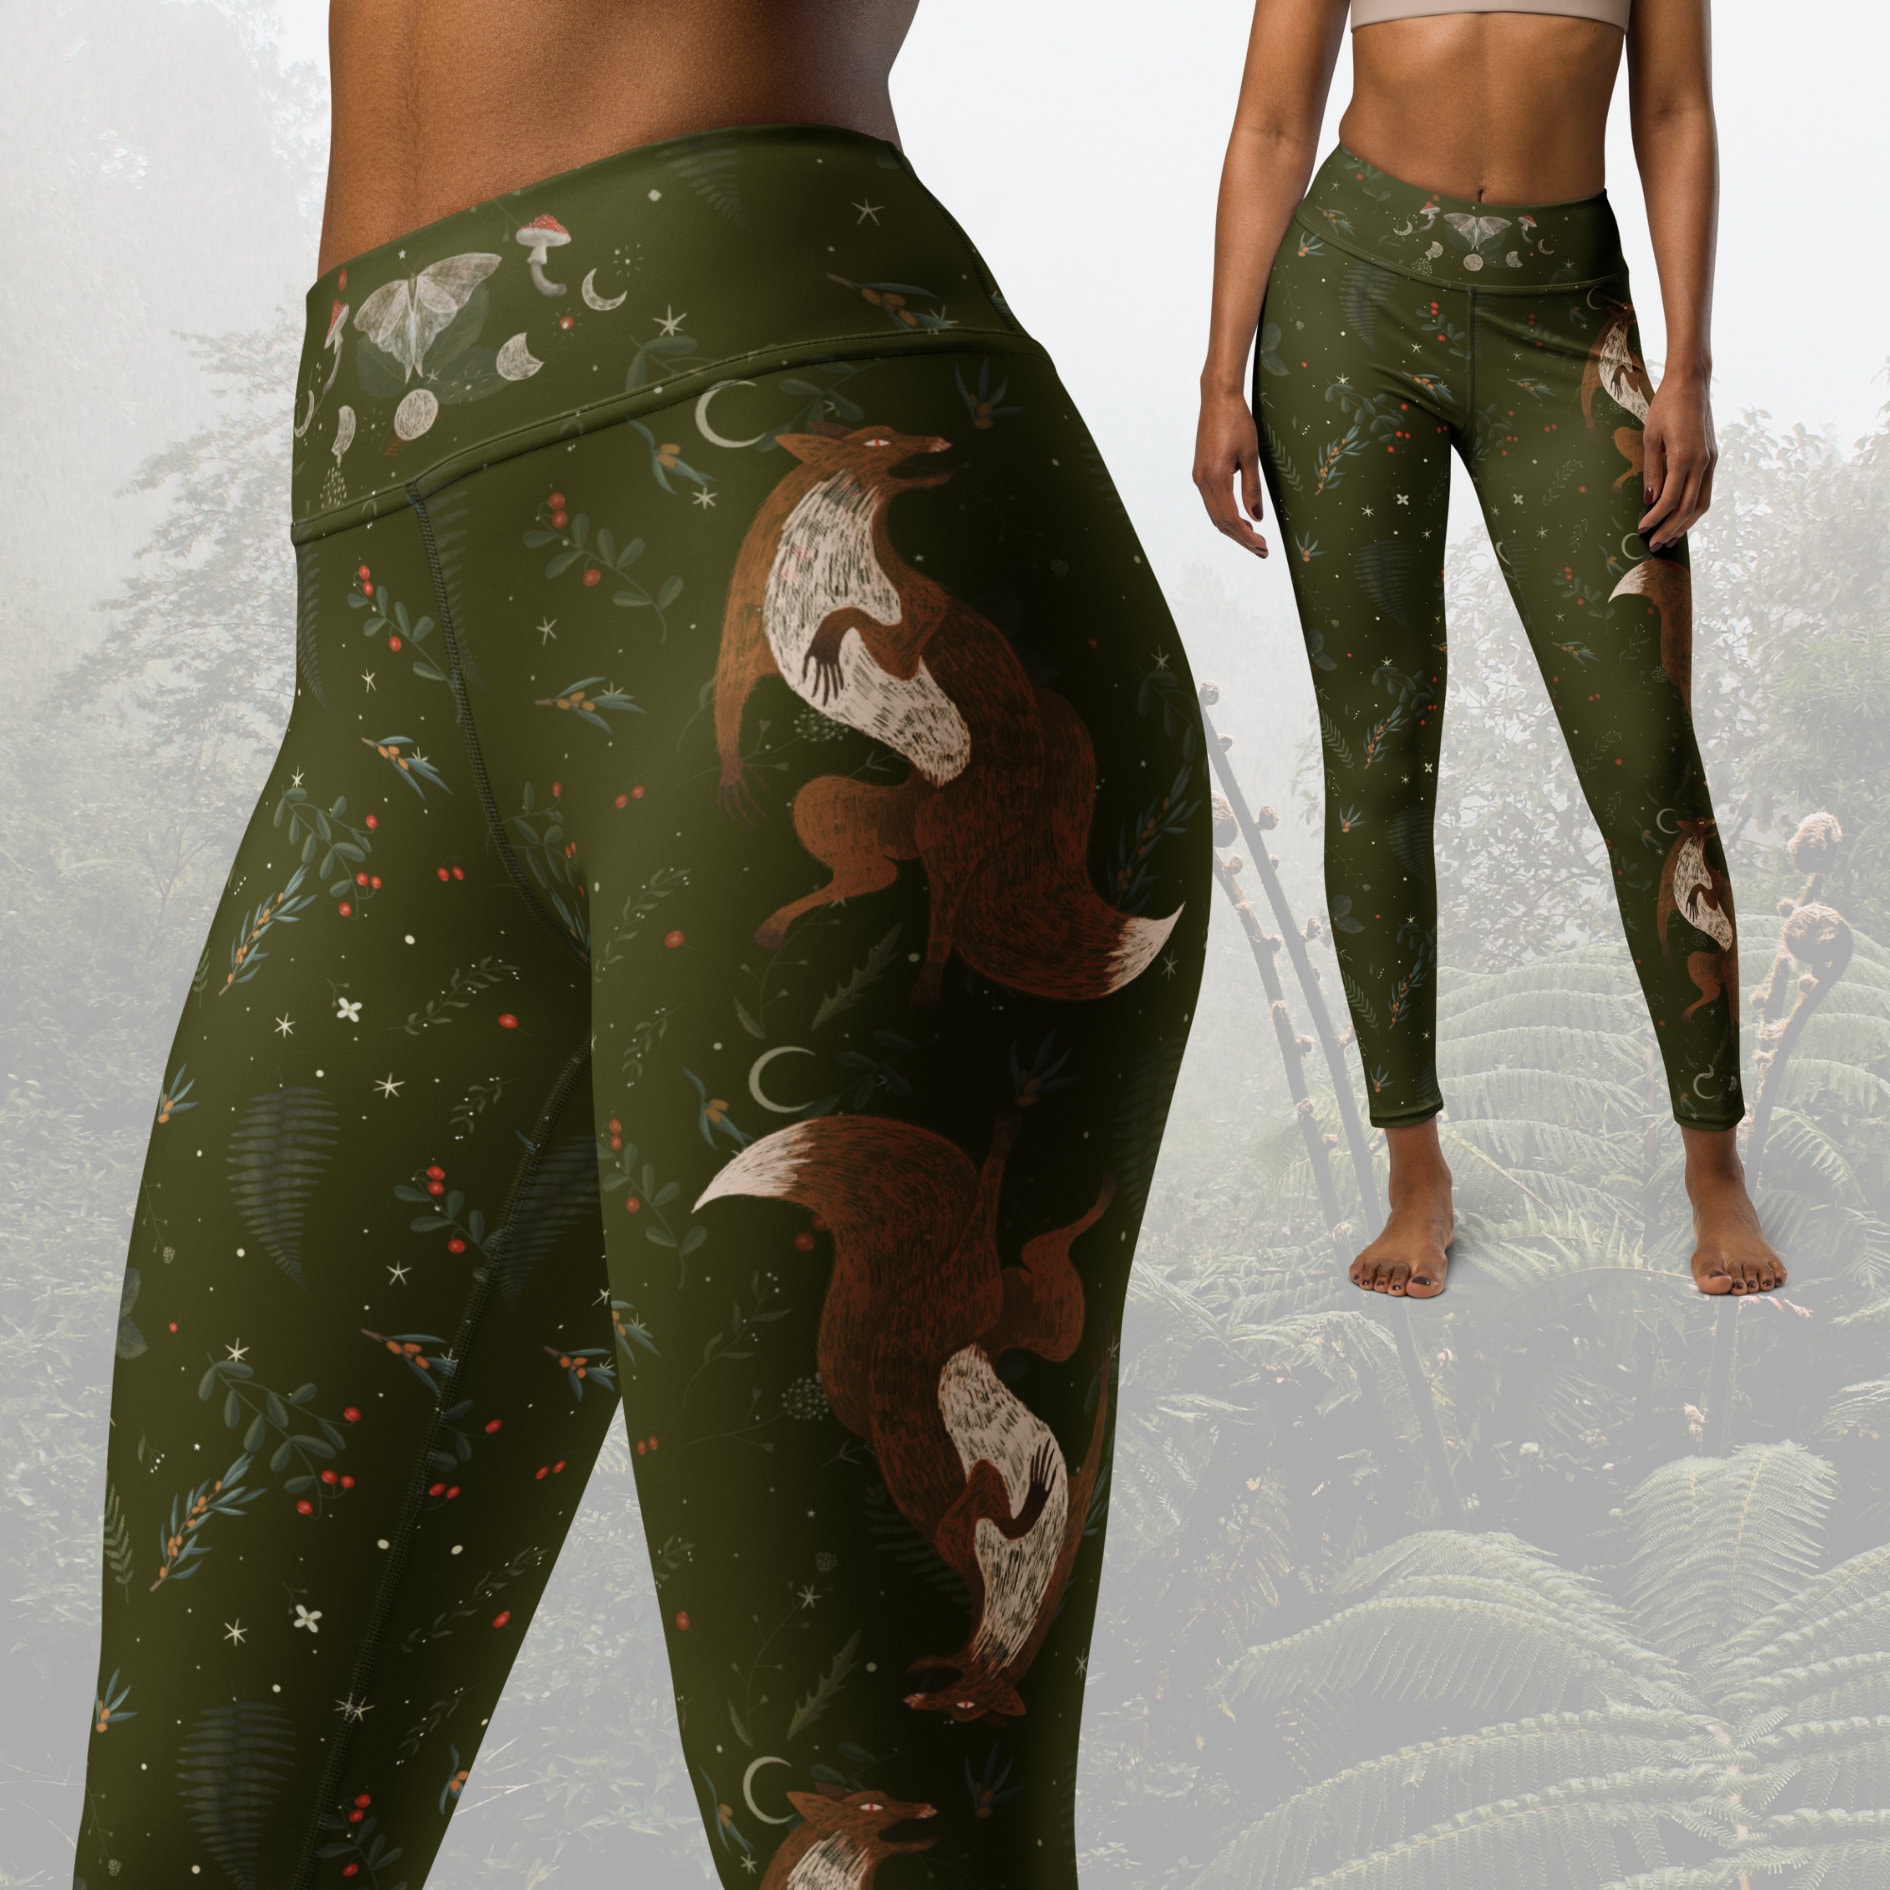 Bahamas Tropical Pattern Leggings Green Printed Woman Flowers